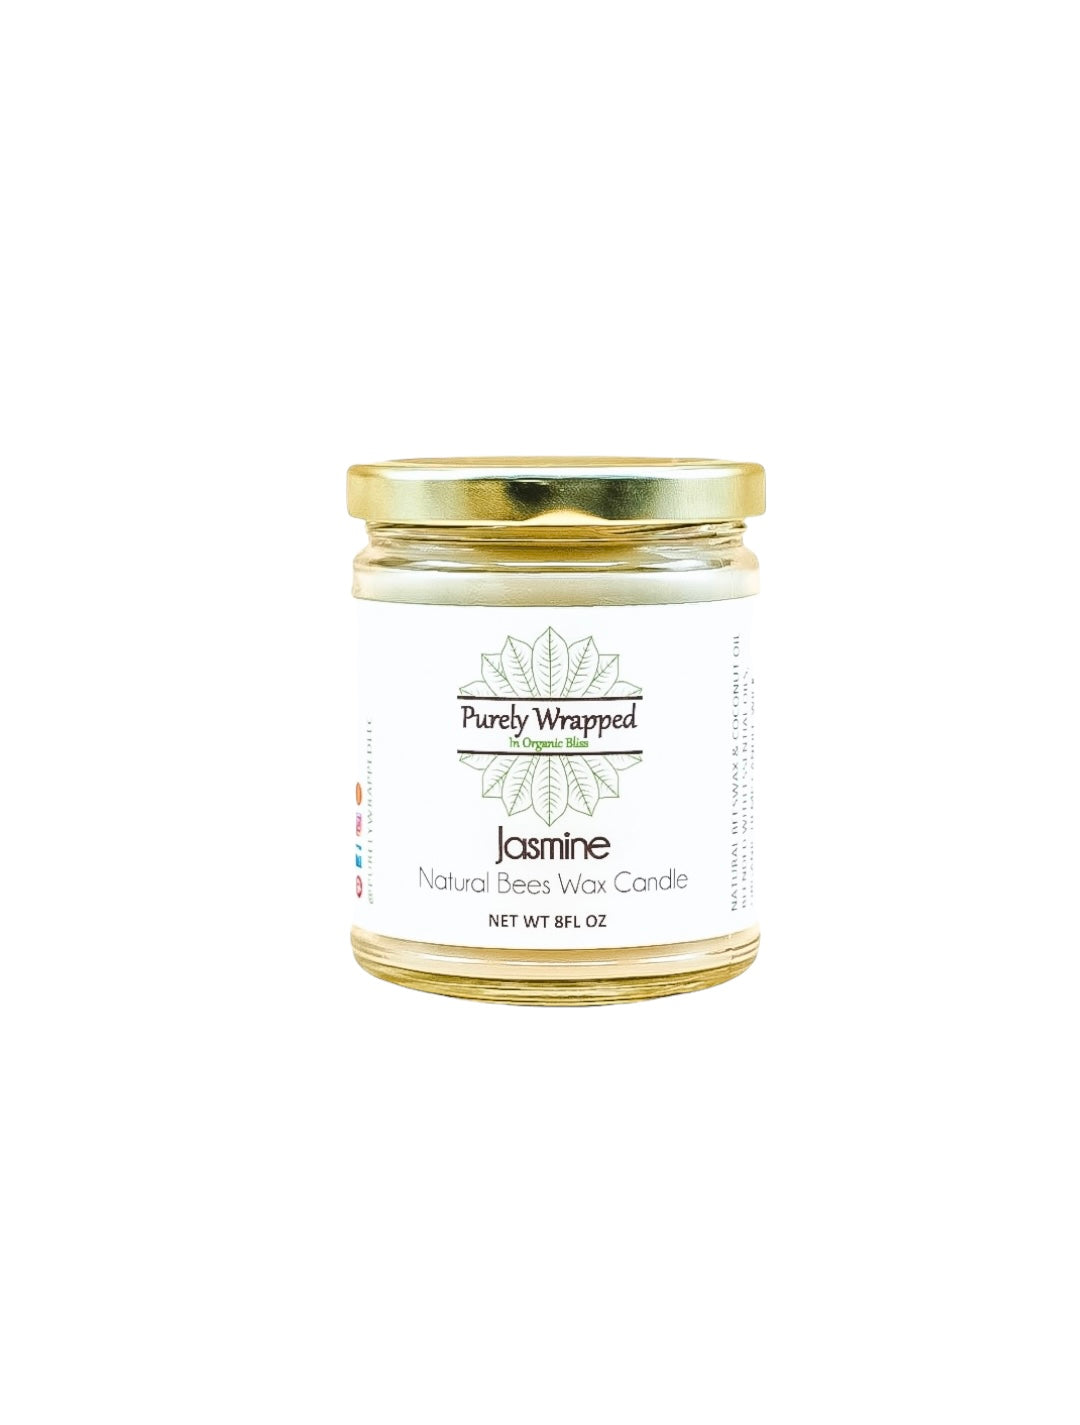 Jasmine Natural Beeswax Candle